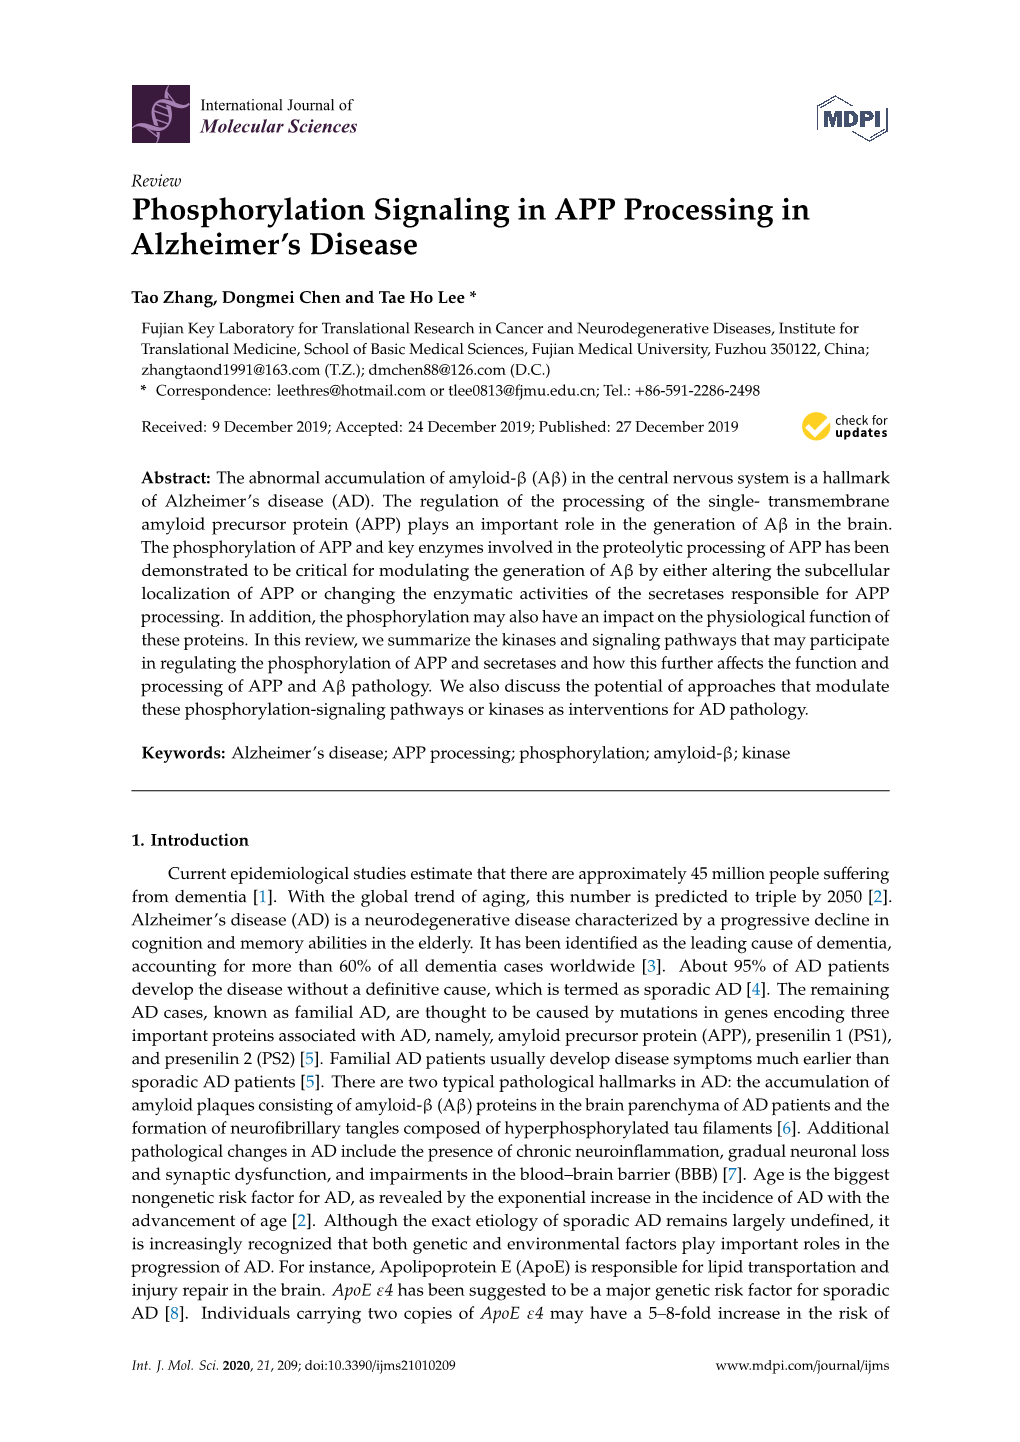 Phosphorylation Signaling in APP Processing in Alzheimer's Disease